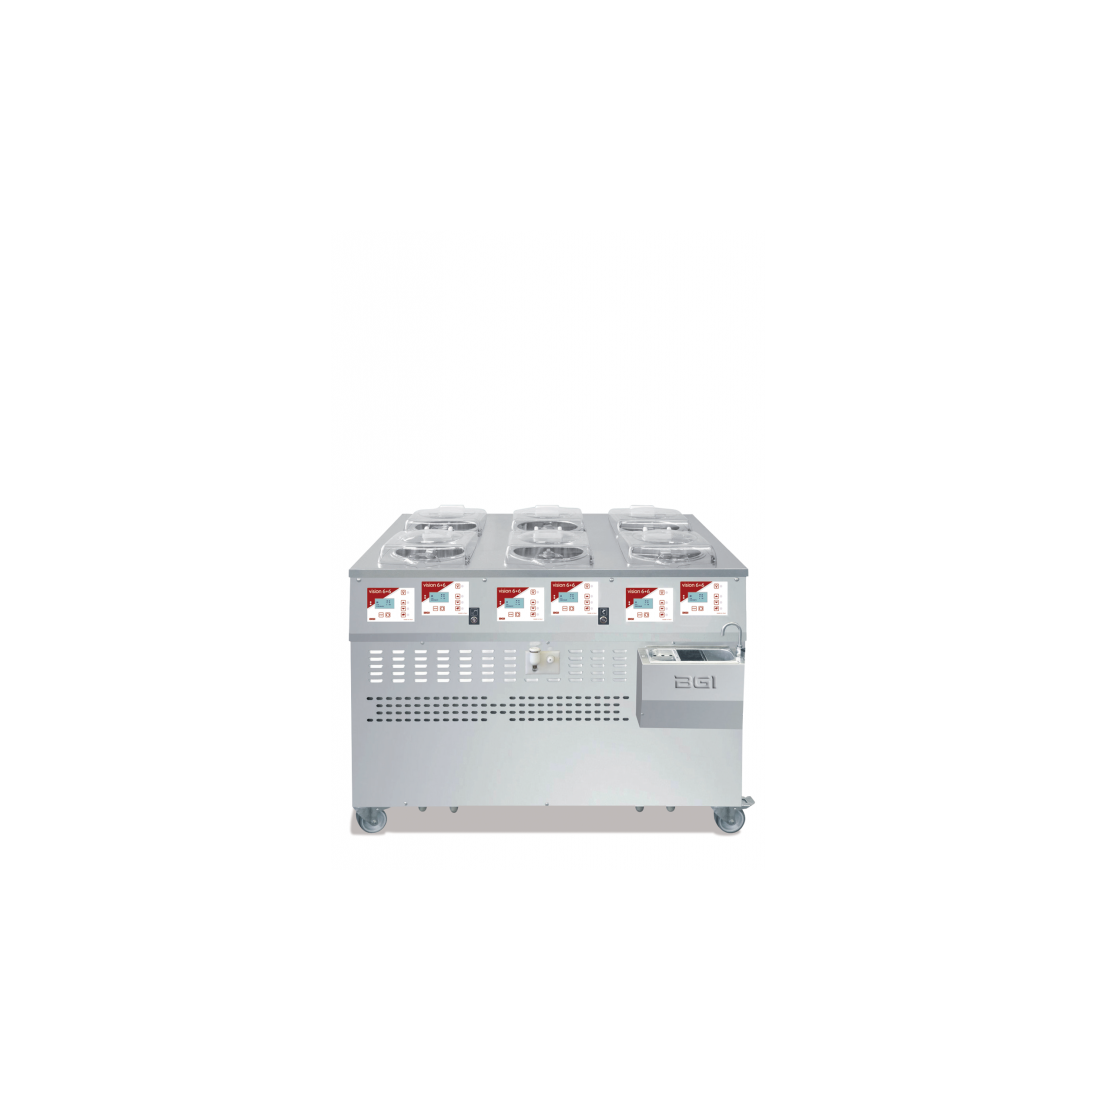 ICETEAM (BGI vision 6+6) Batch Freezer And Display Unit|mkayn|مكاين